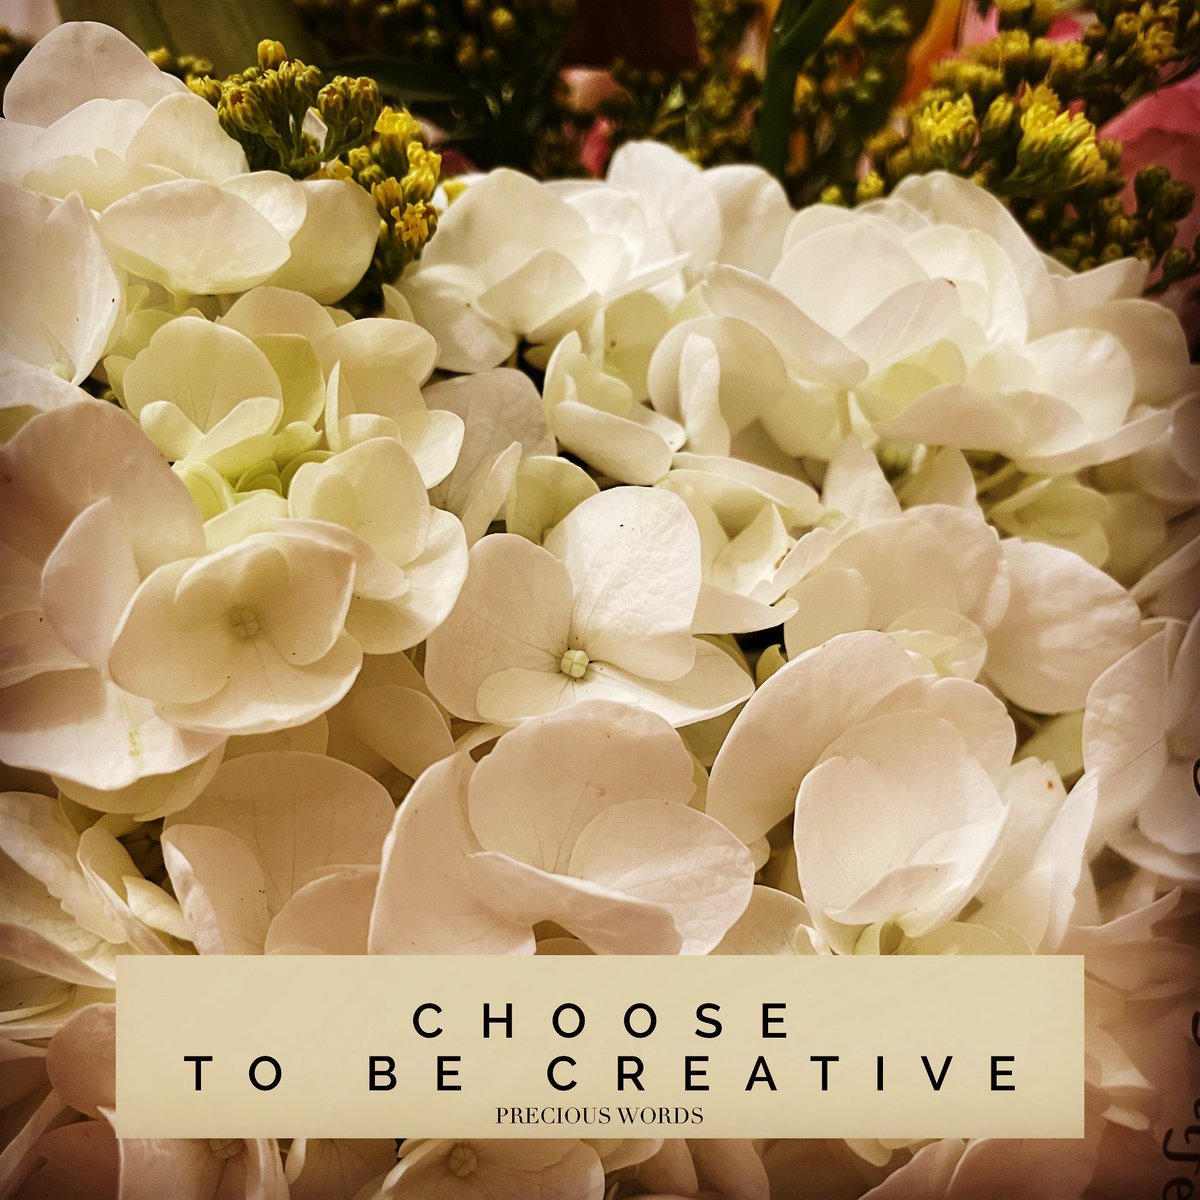 Choose to be creative. Make the most of what you have.
#becreative #getcreative #makethemostoflife #preciouswords #preciouswordsoflife #choosehappiness #choosetocreateyourlife